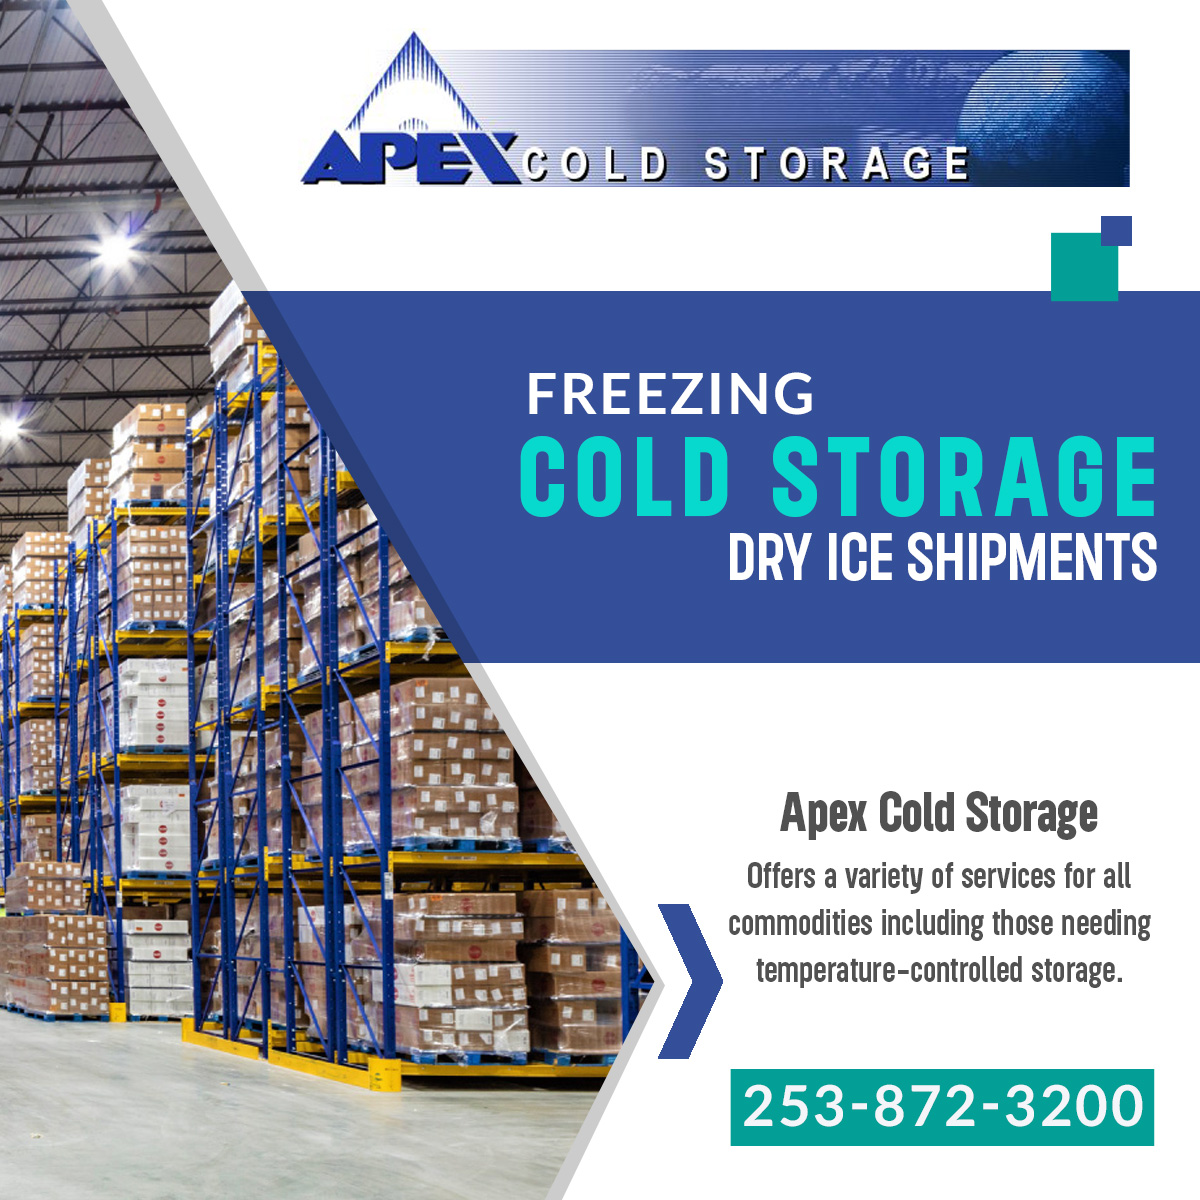 Apex Cold Storage